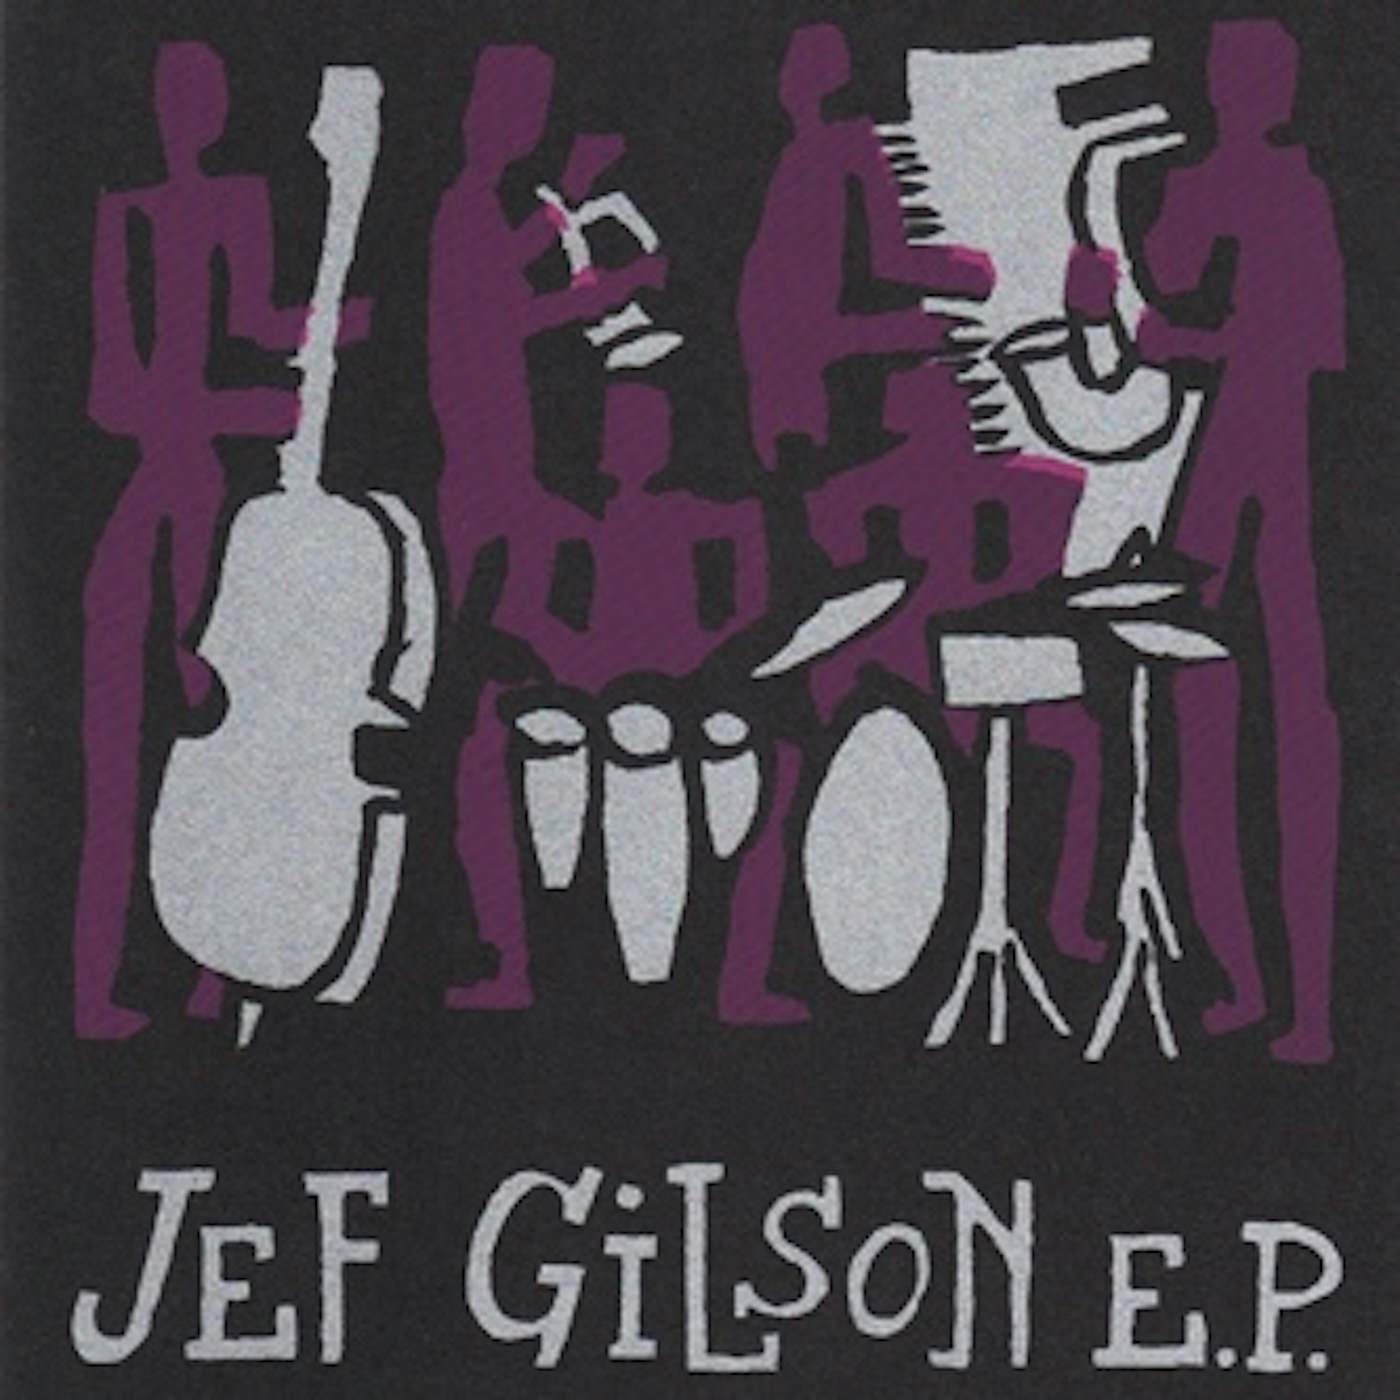 JEF GILSON EP Vinyl Record - UK Release